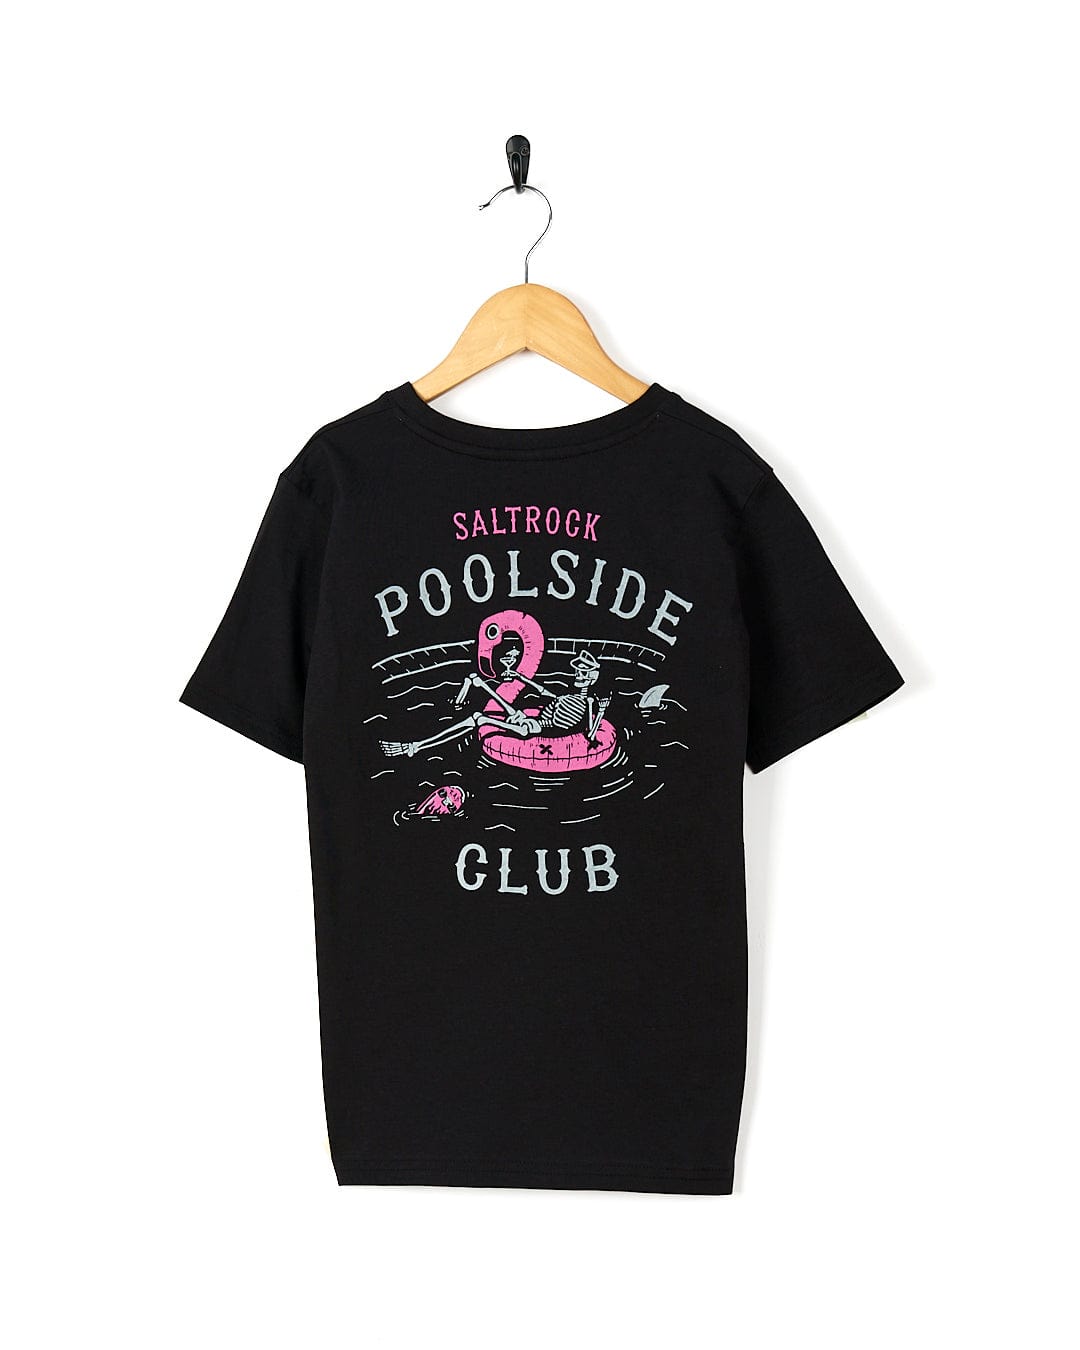 Poolside Club - Kids Short Sleeve T-Shirt - Black